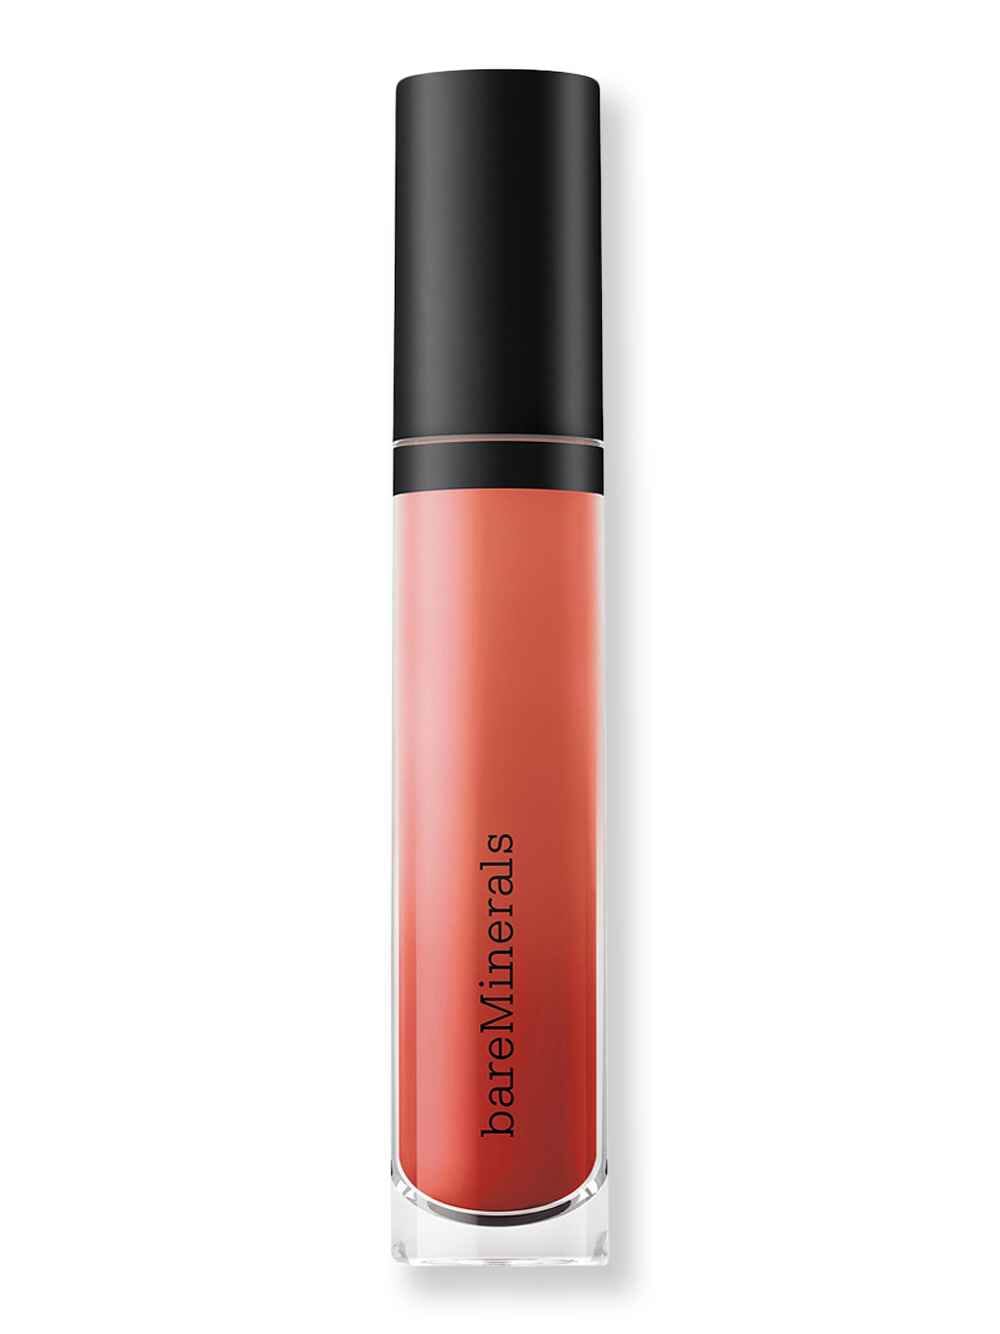 Bareminerals Bareminerals Statement Matte Liquid Lipcolor Fire Firey Orange Red 0.13 fl oz4 ml Lipstick, Lip Gloss, & Lip Liners 